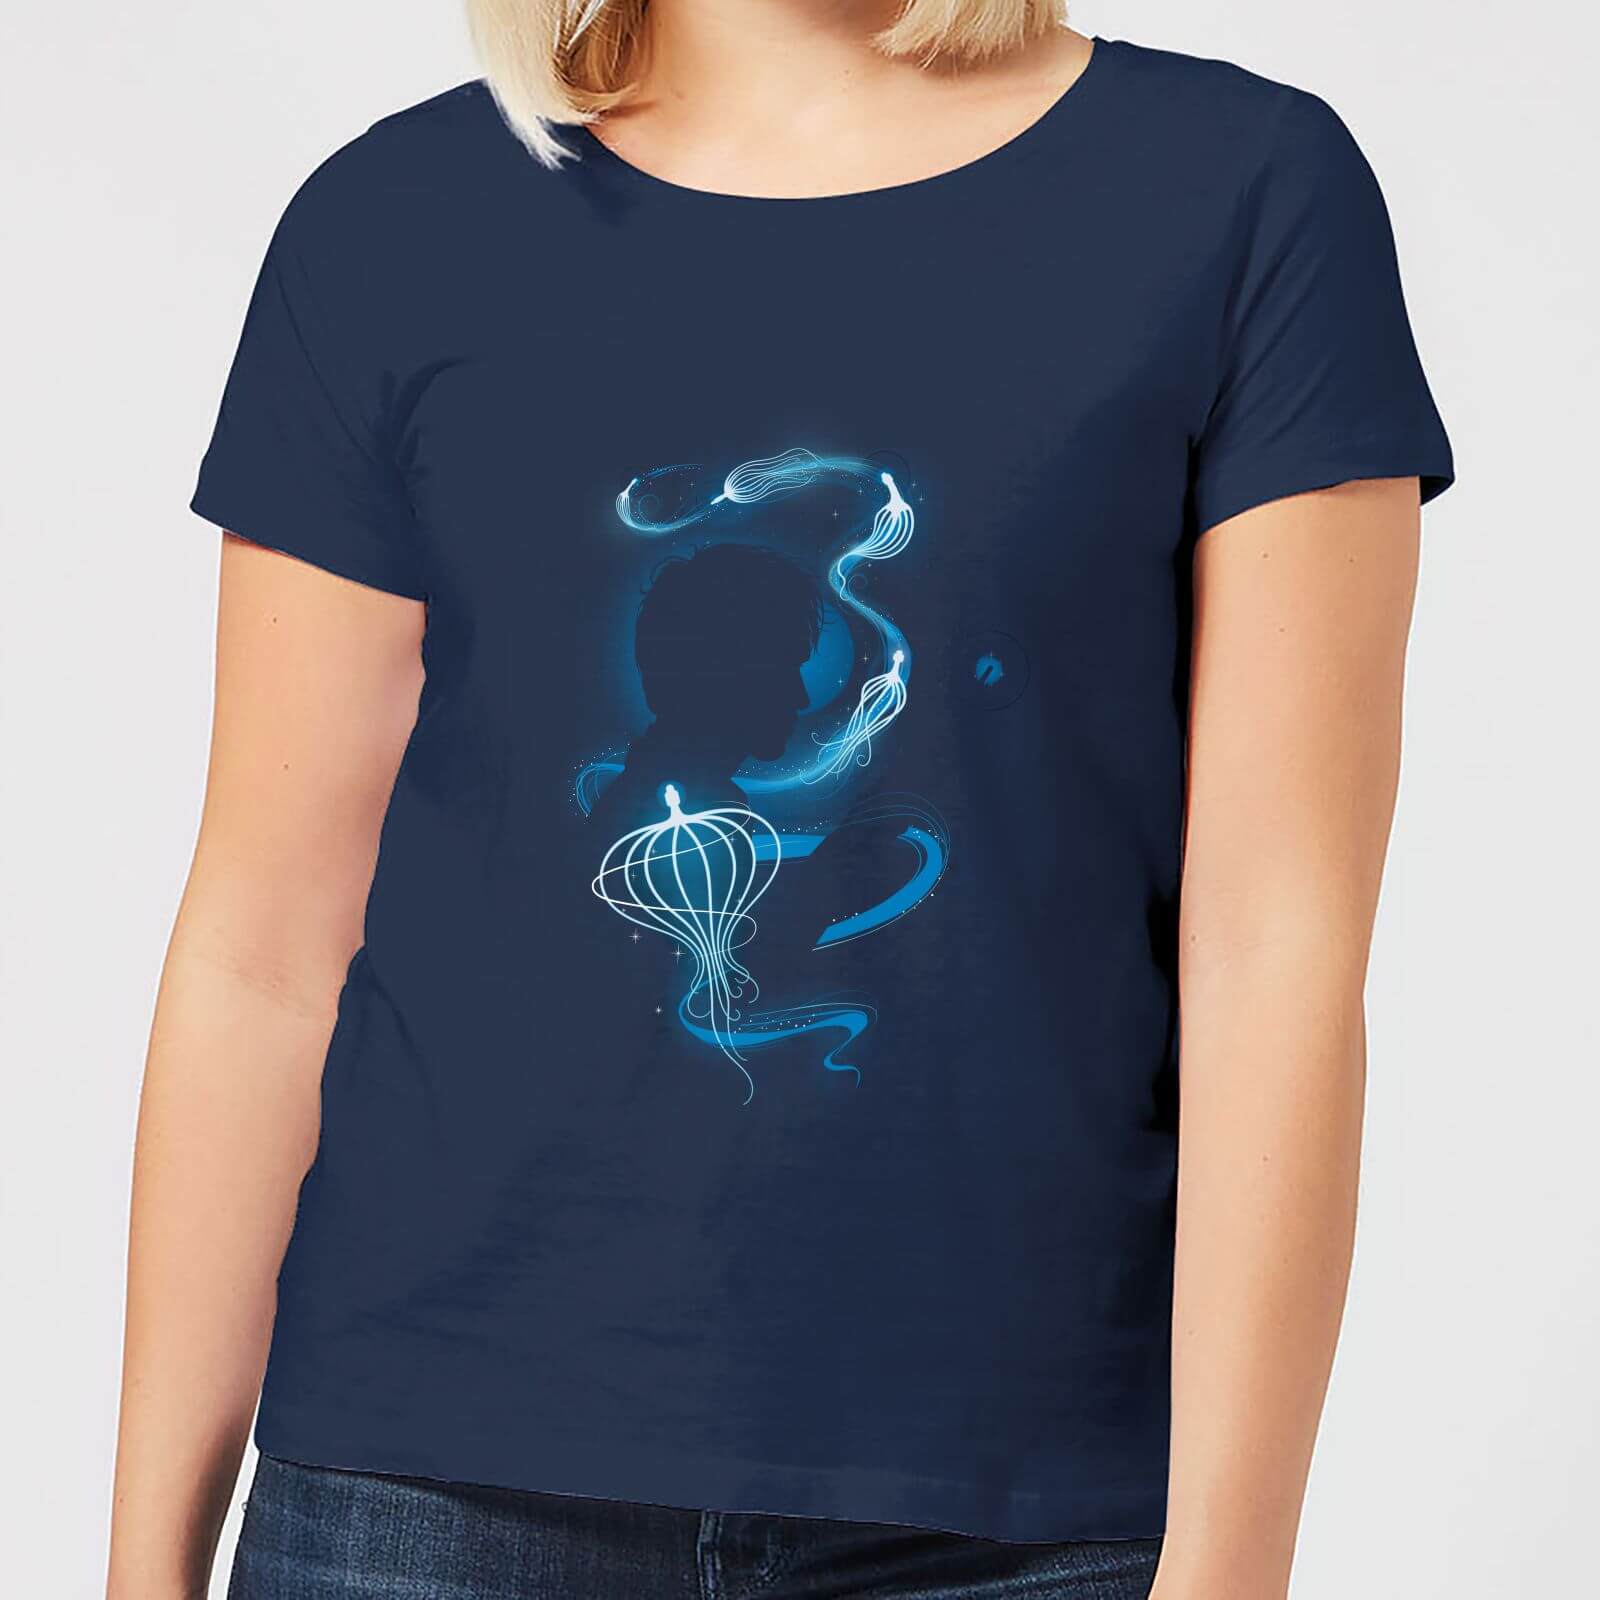 Fantastic Beasts Newt Silhouette Women's T-Shirt - Navy - L - Navy